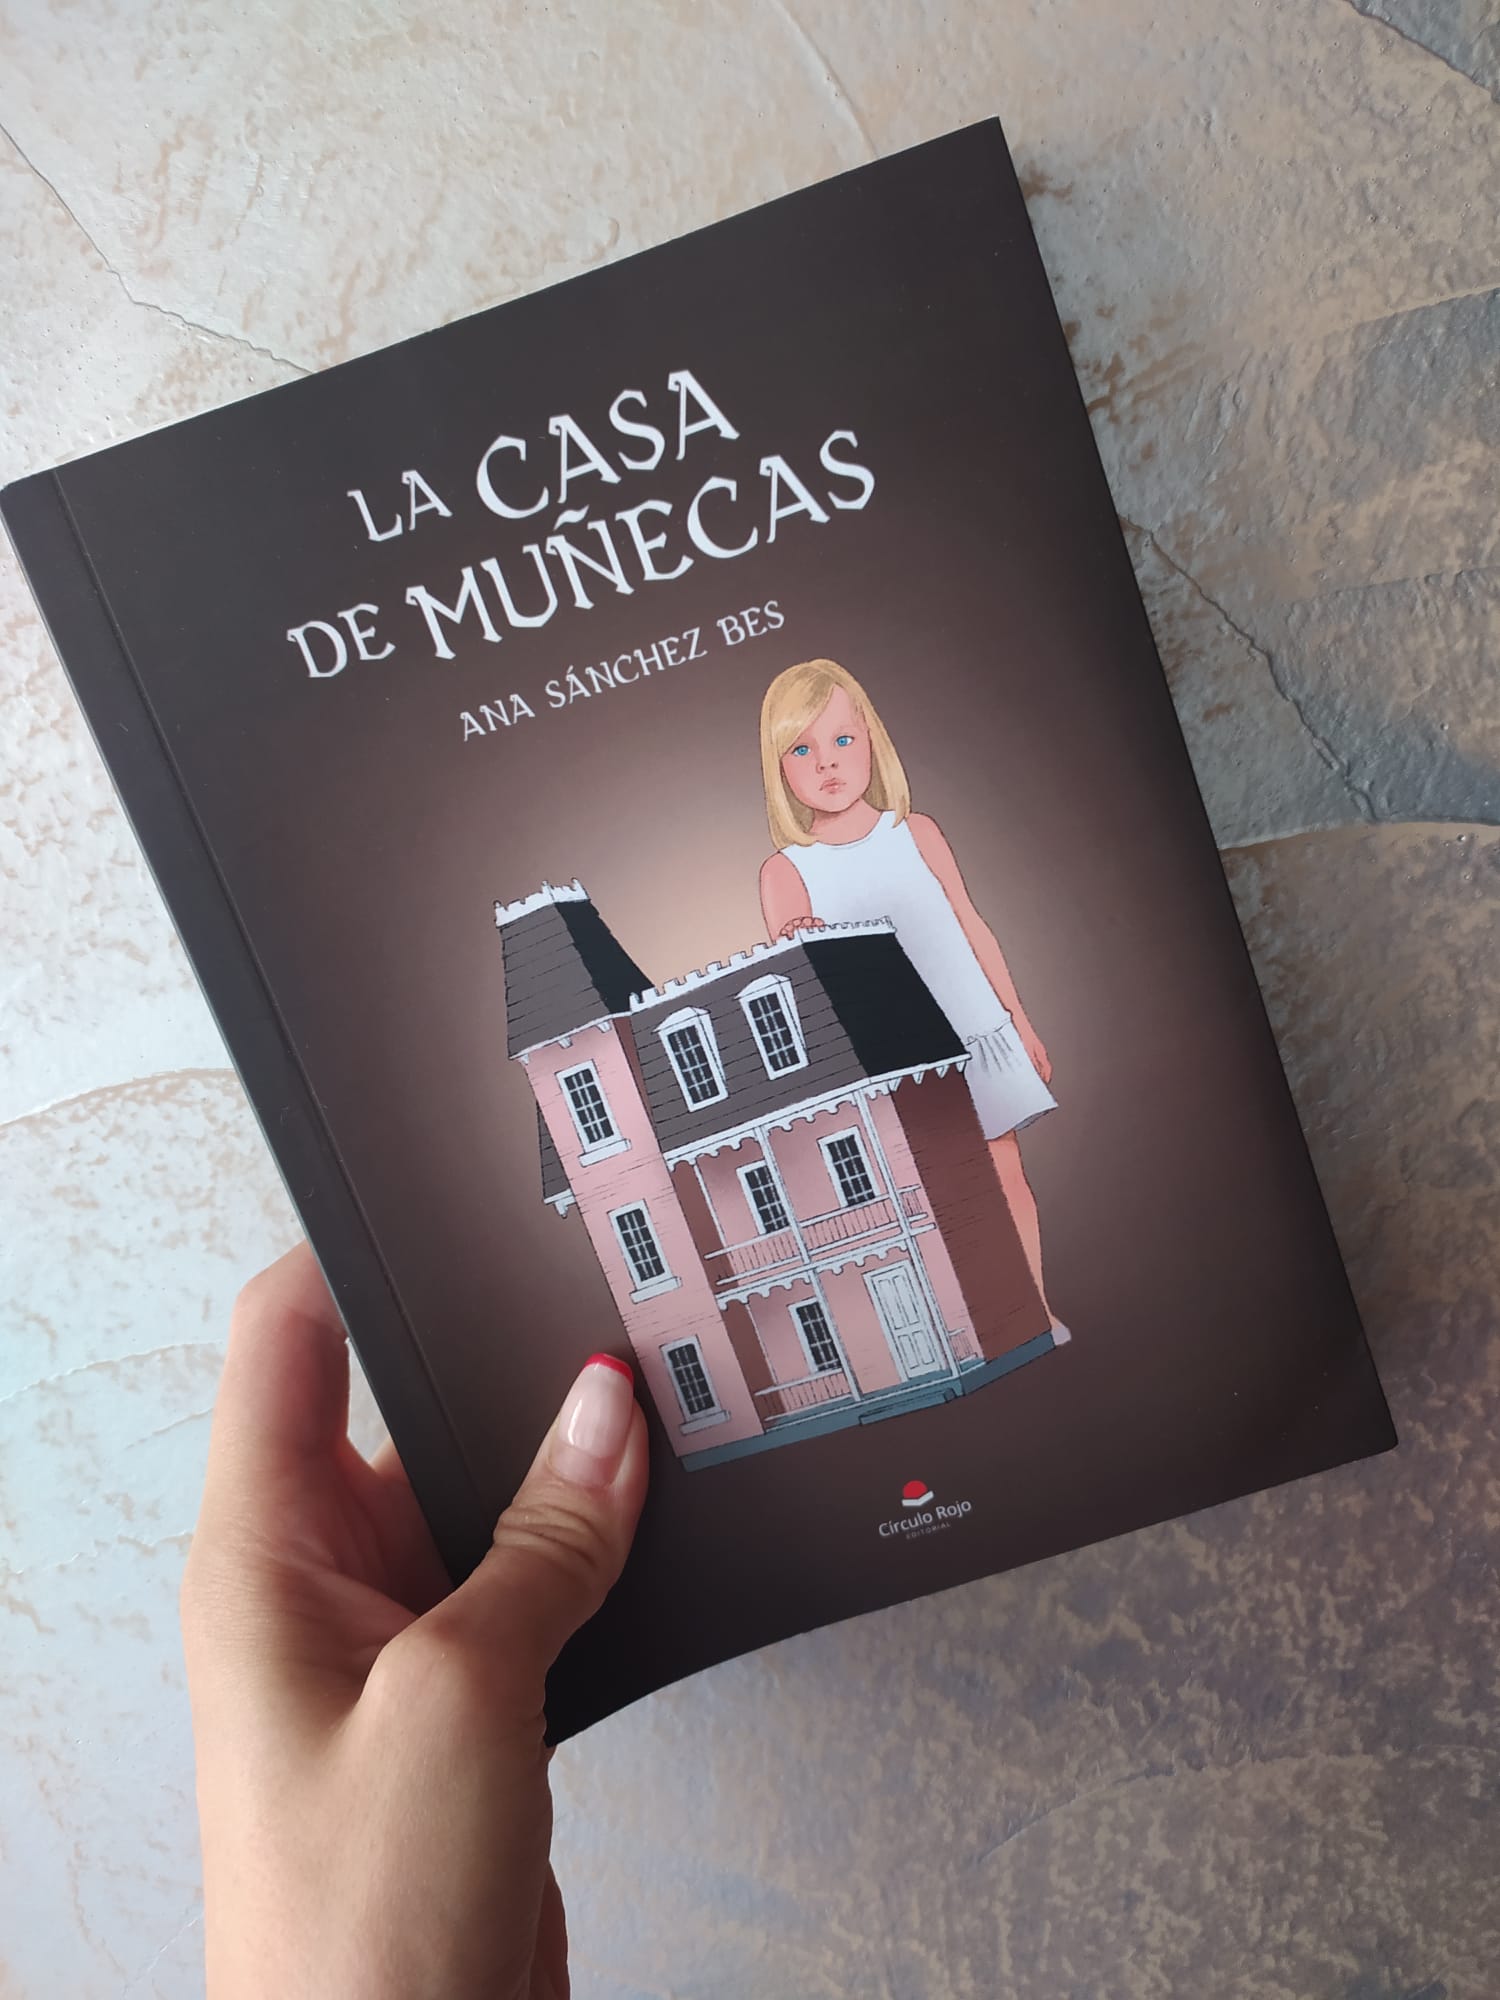 Reseña de “La casa de muñecas”, de Ana Sánchez Bes | Por Daniela González